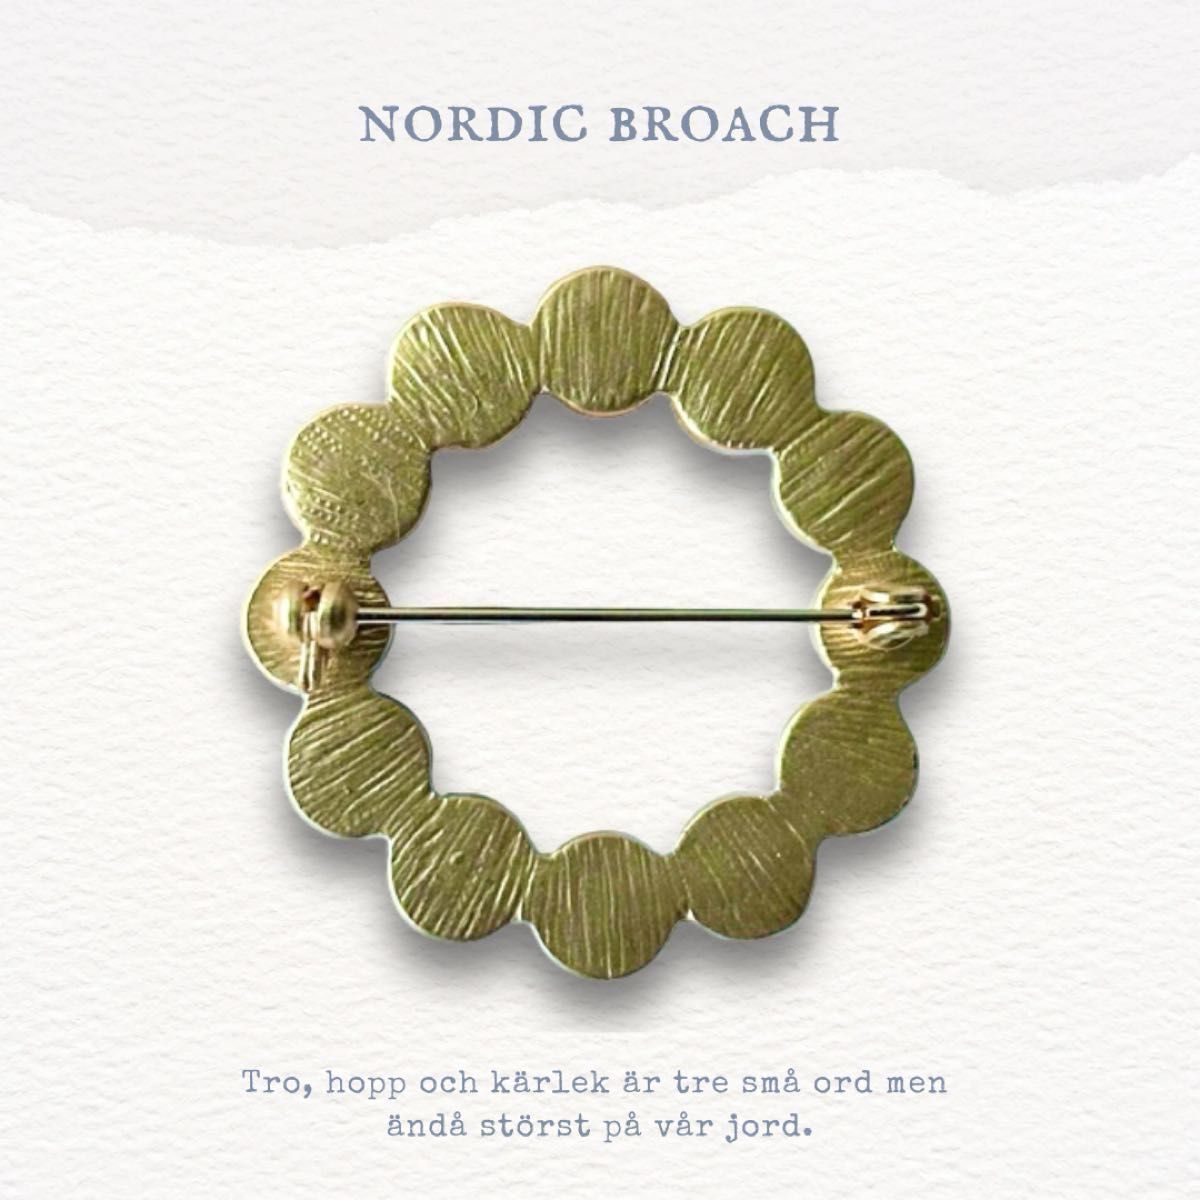 Nordic broach 北欧風 ブローチ サークル グリーン ミナペルホネンお好きな方に